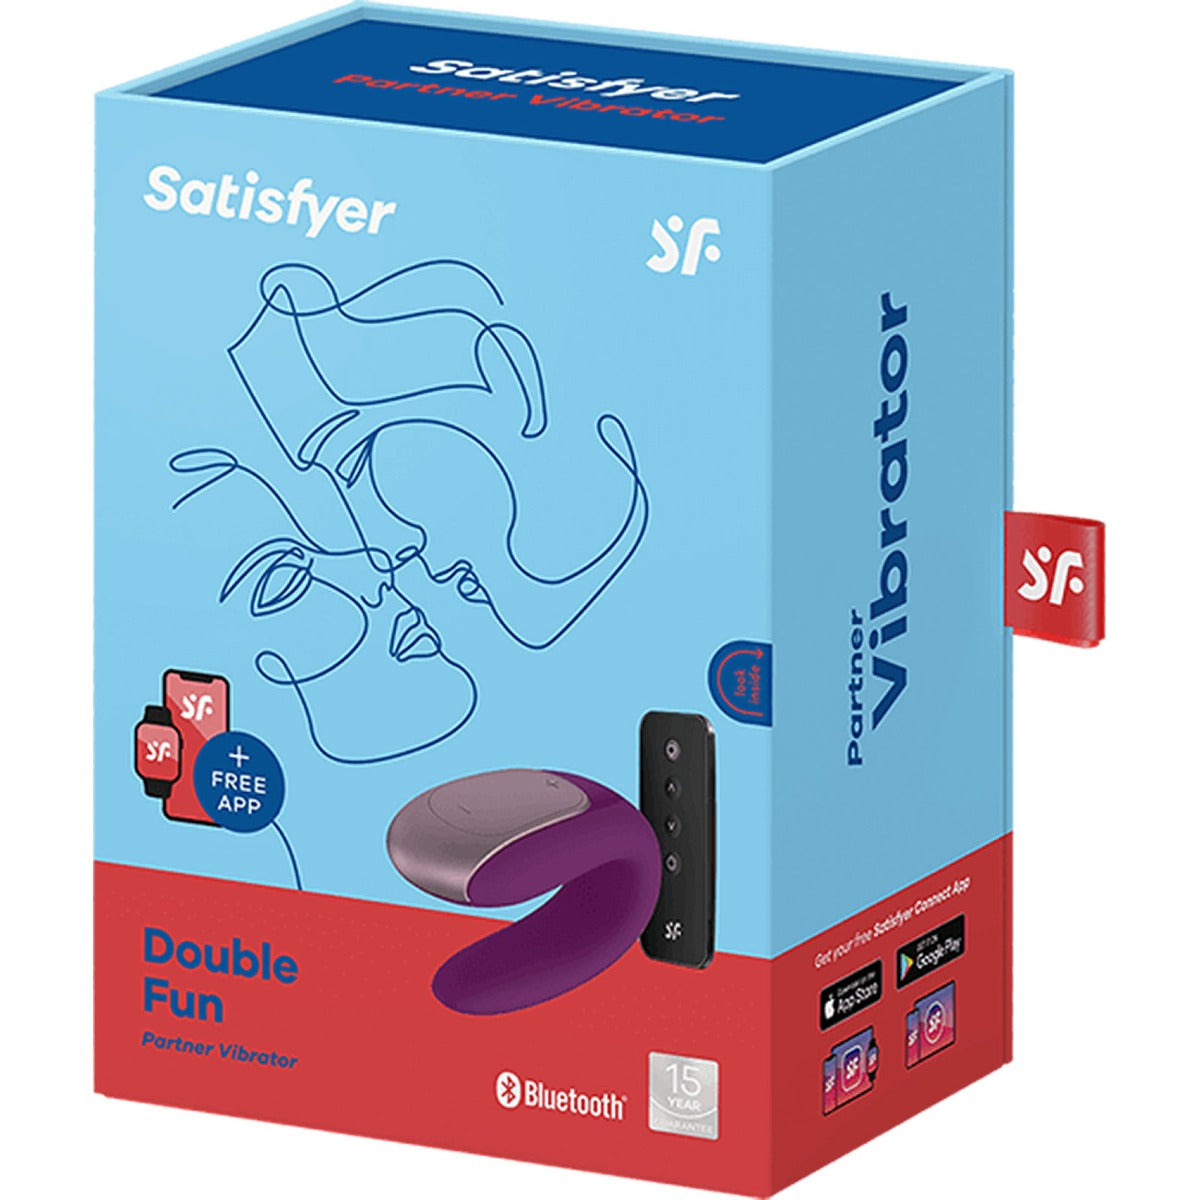 Satisfyer-Double-Fun-Partner-Vibrator-Violet